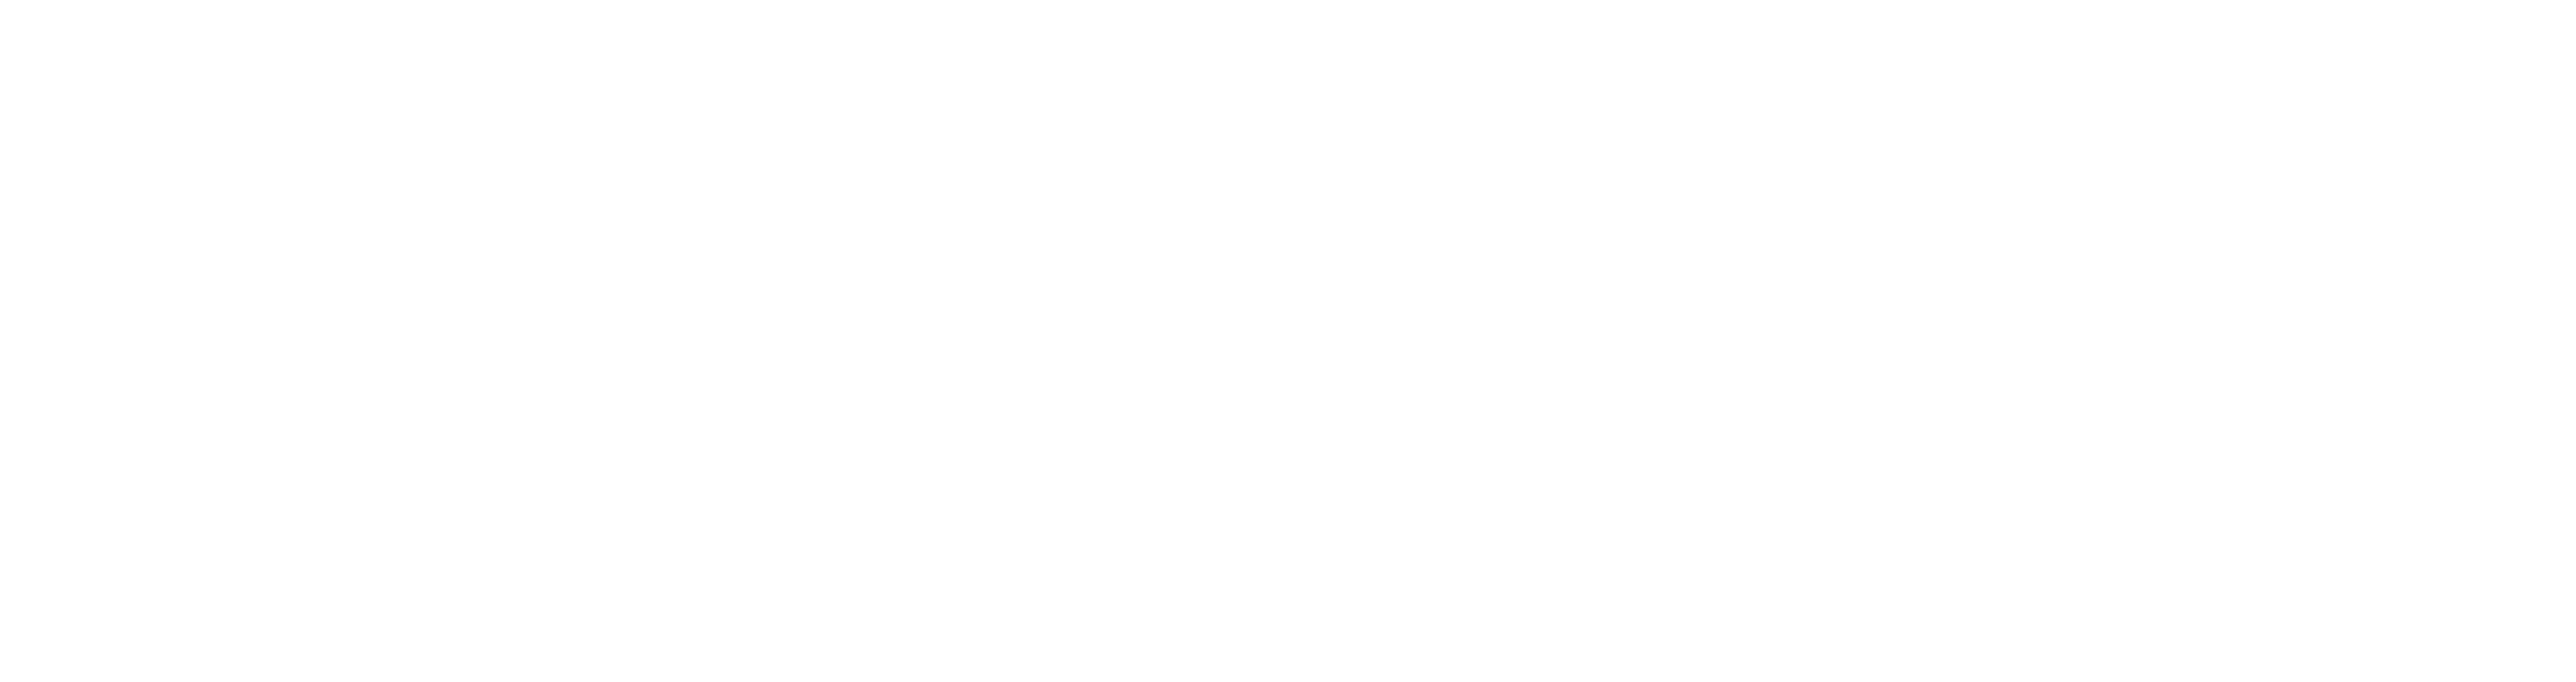 MCP Team